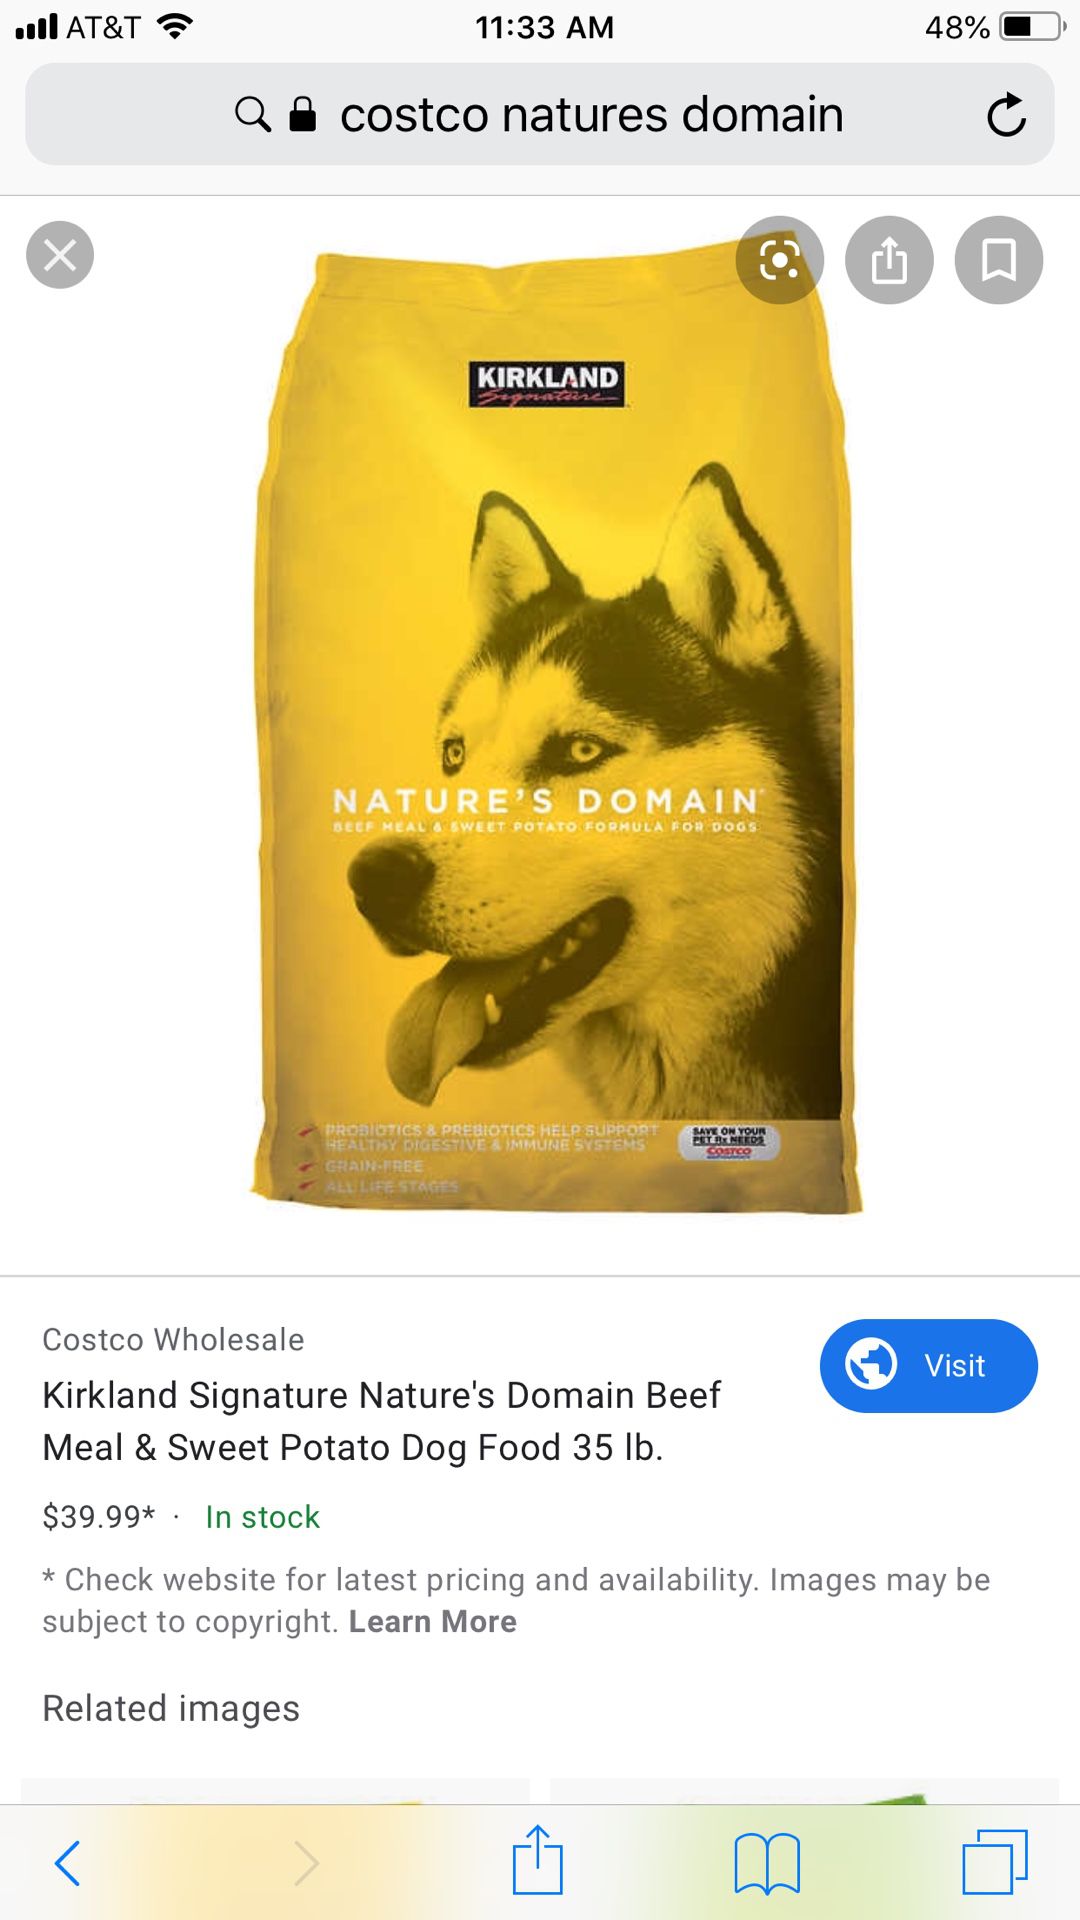 Costco/Kirkland Dog Food